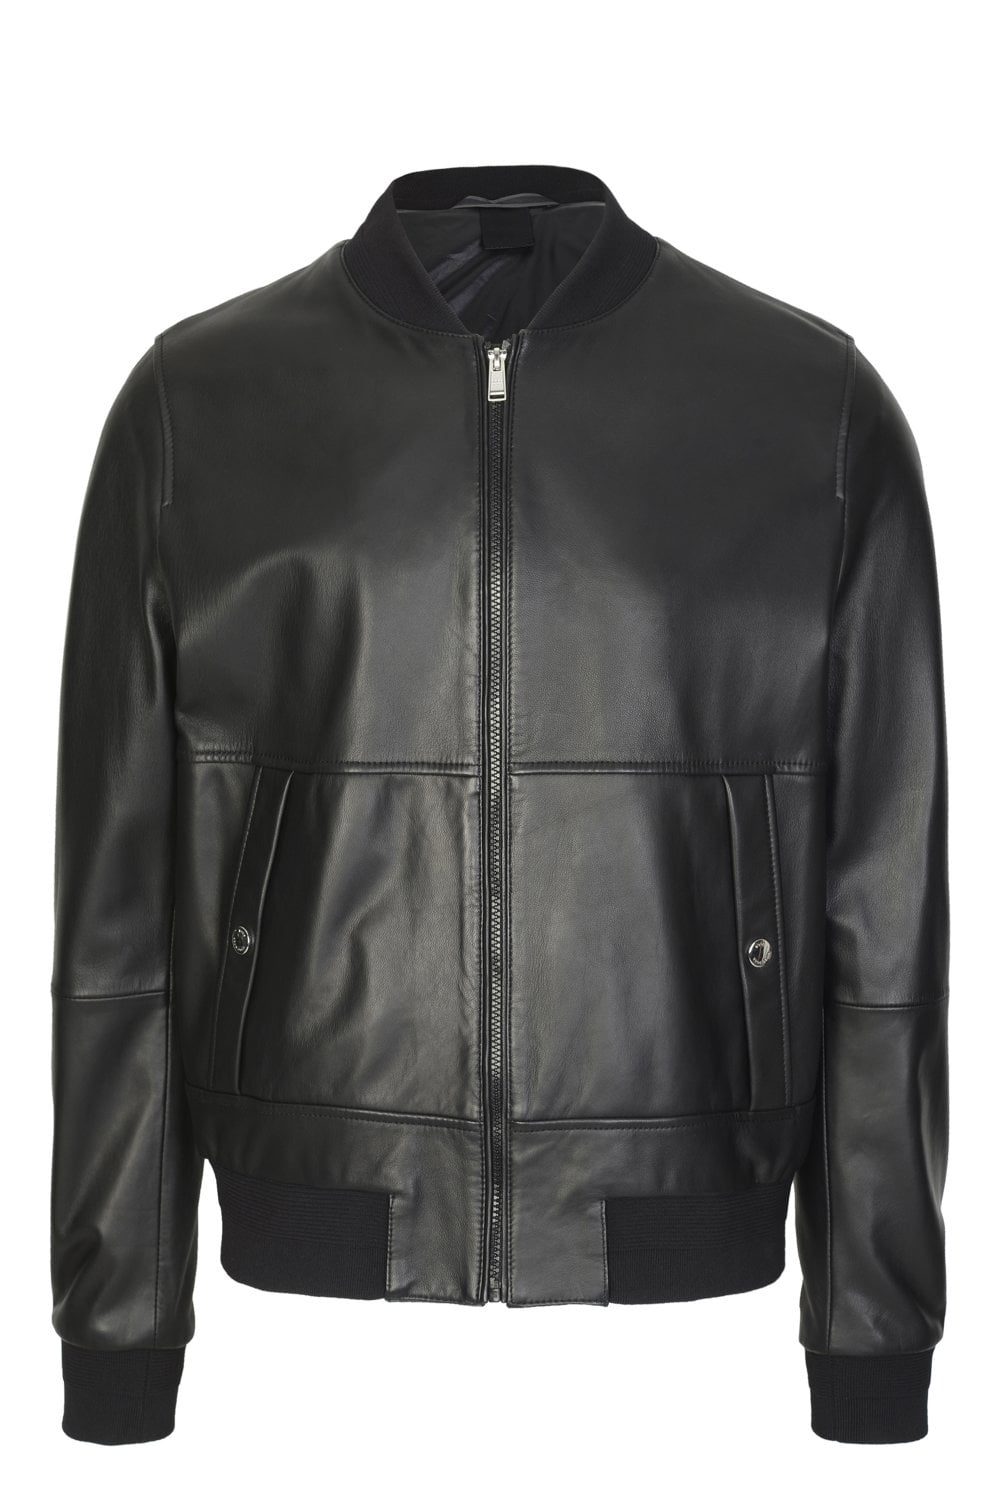 Leather Jacket Hugo Boss - RockStar Jacket